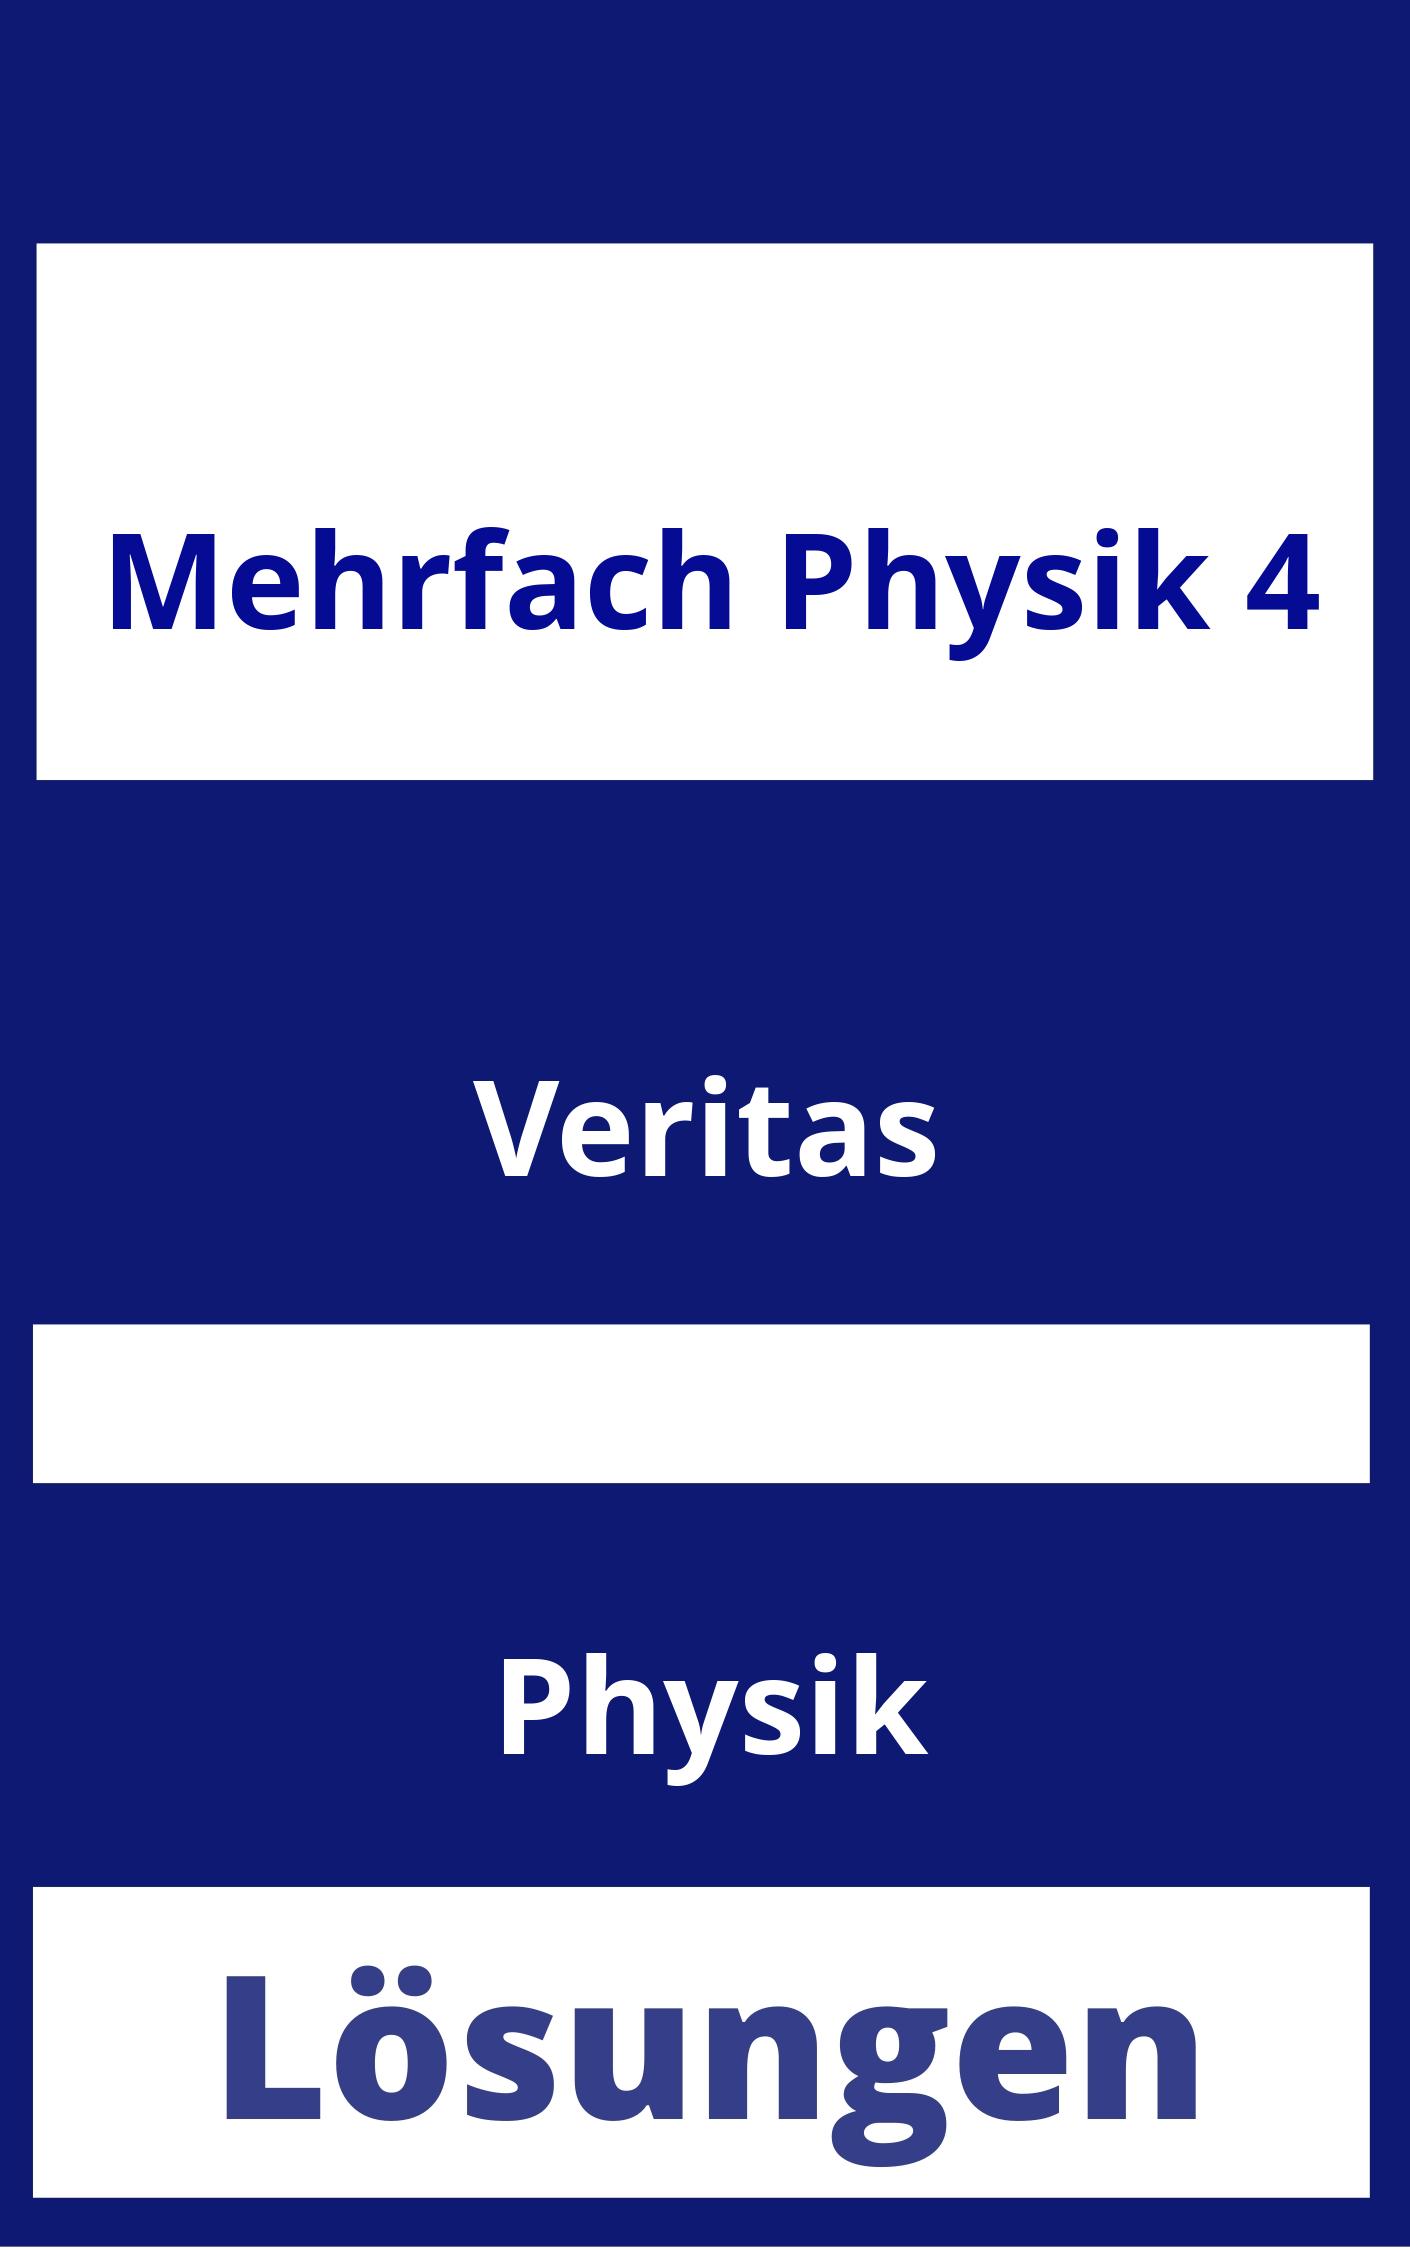 MEHRfach Physik 4